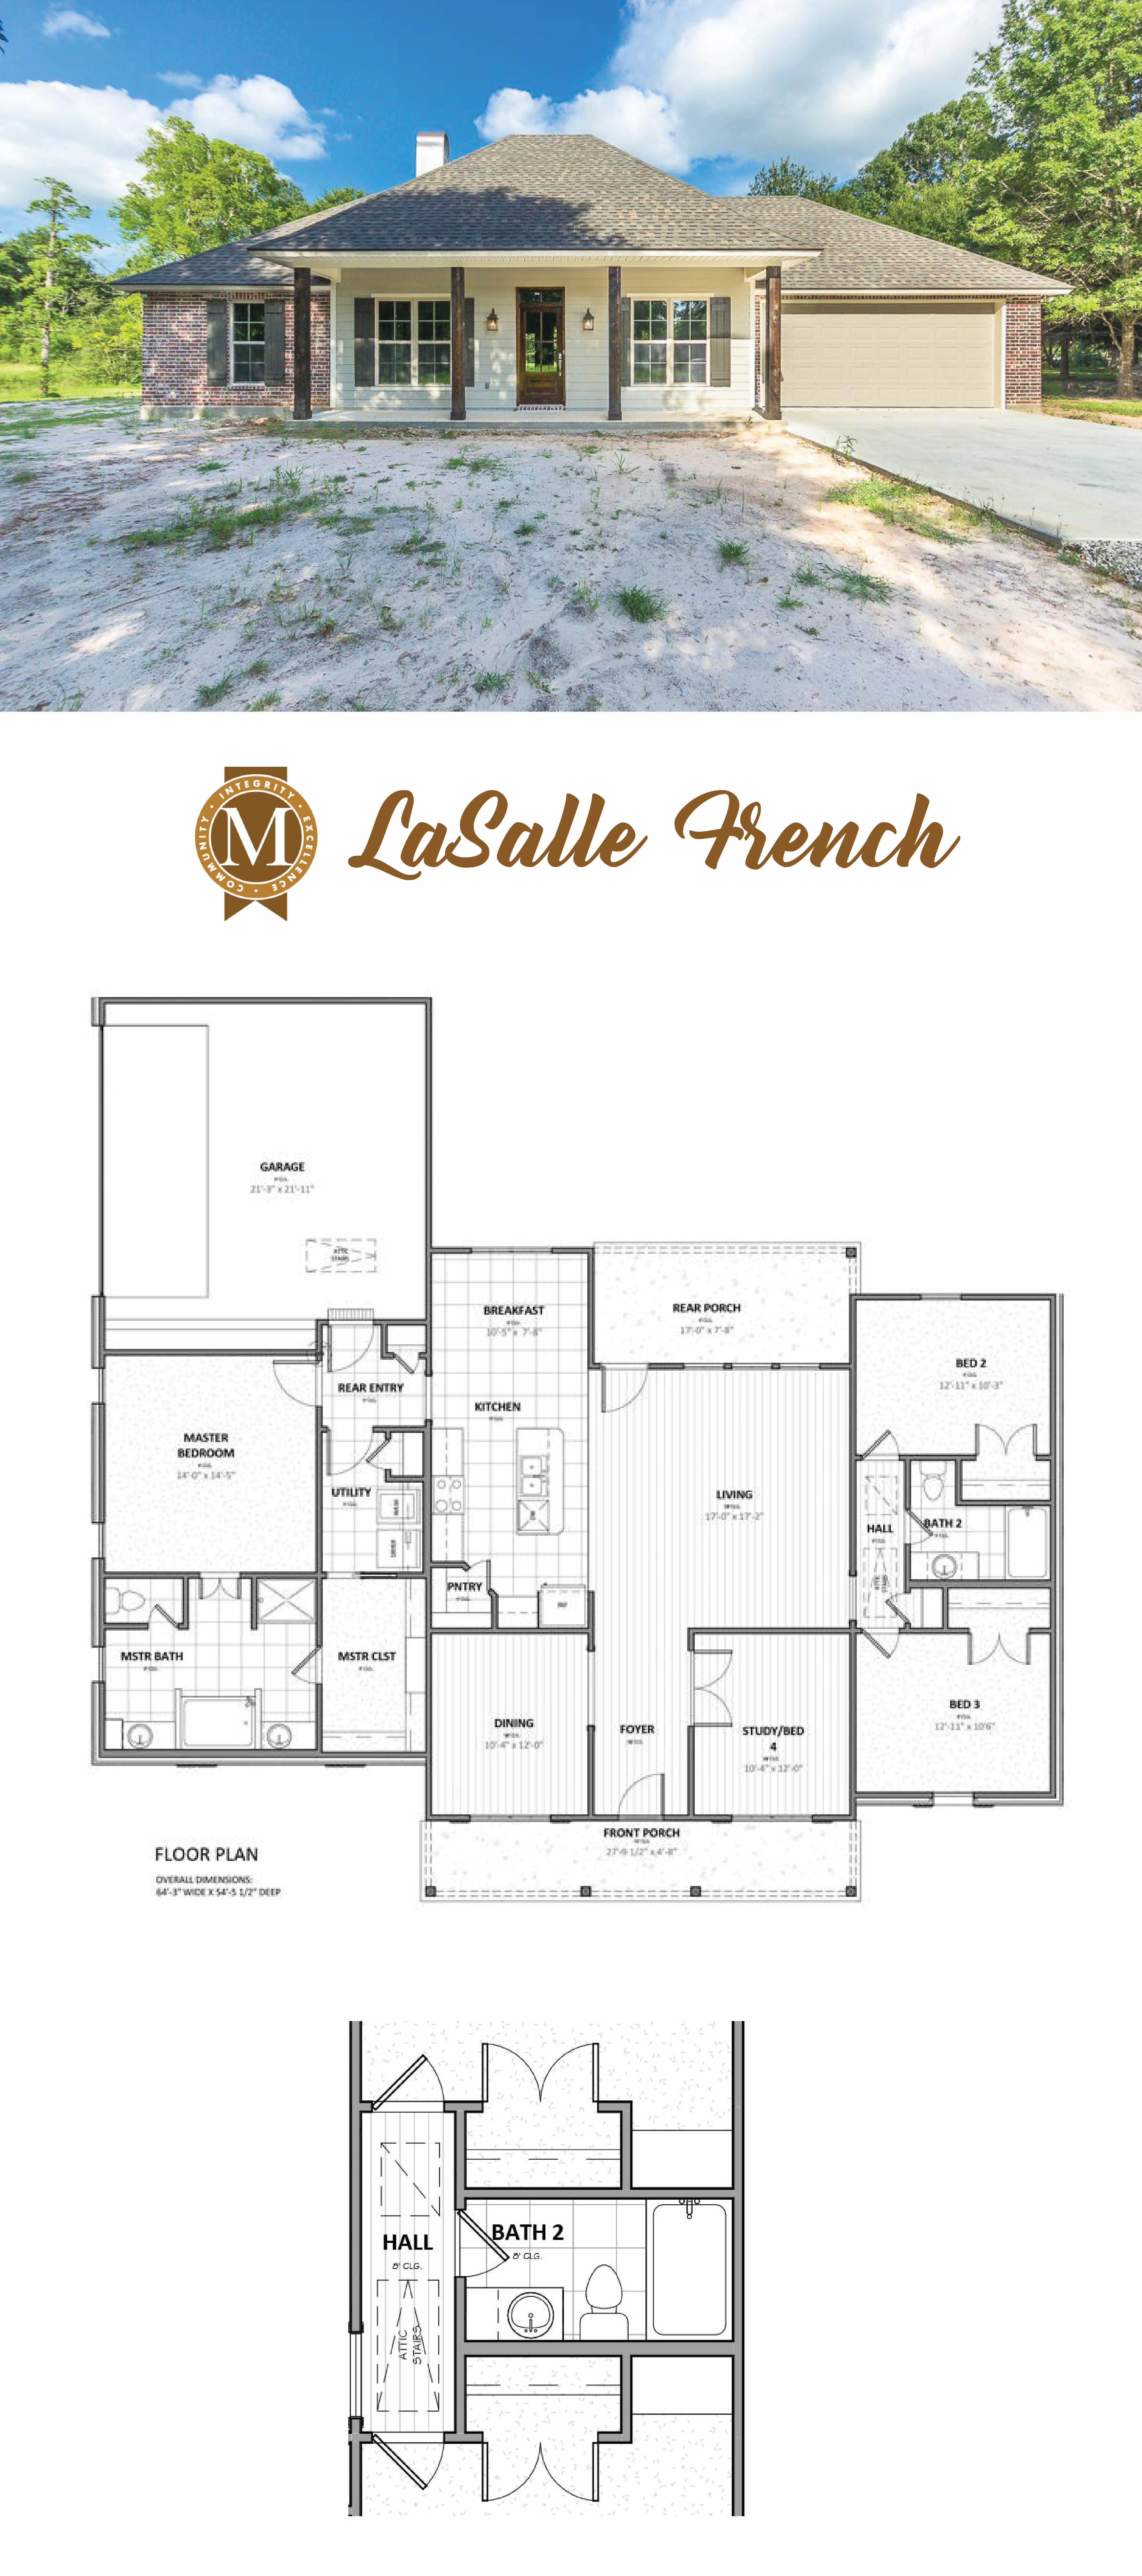 Lasalle French Floor Plan Living Sq Ft 2,031 Bedrooms 3